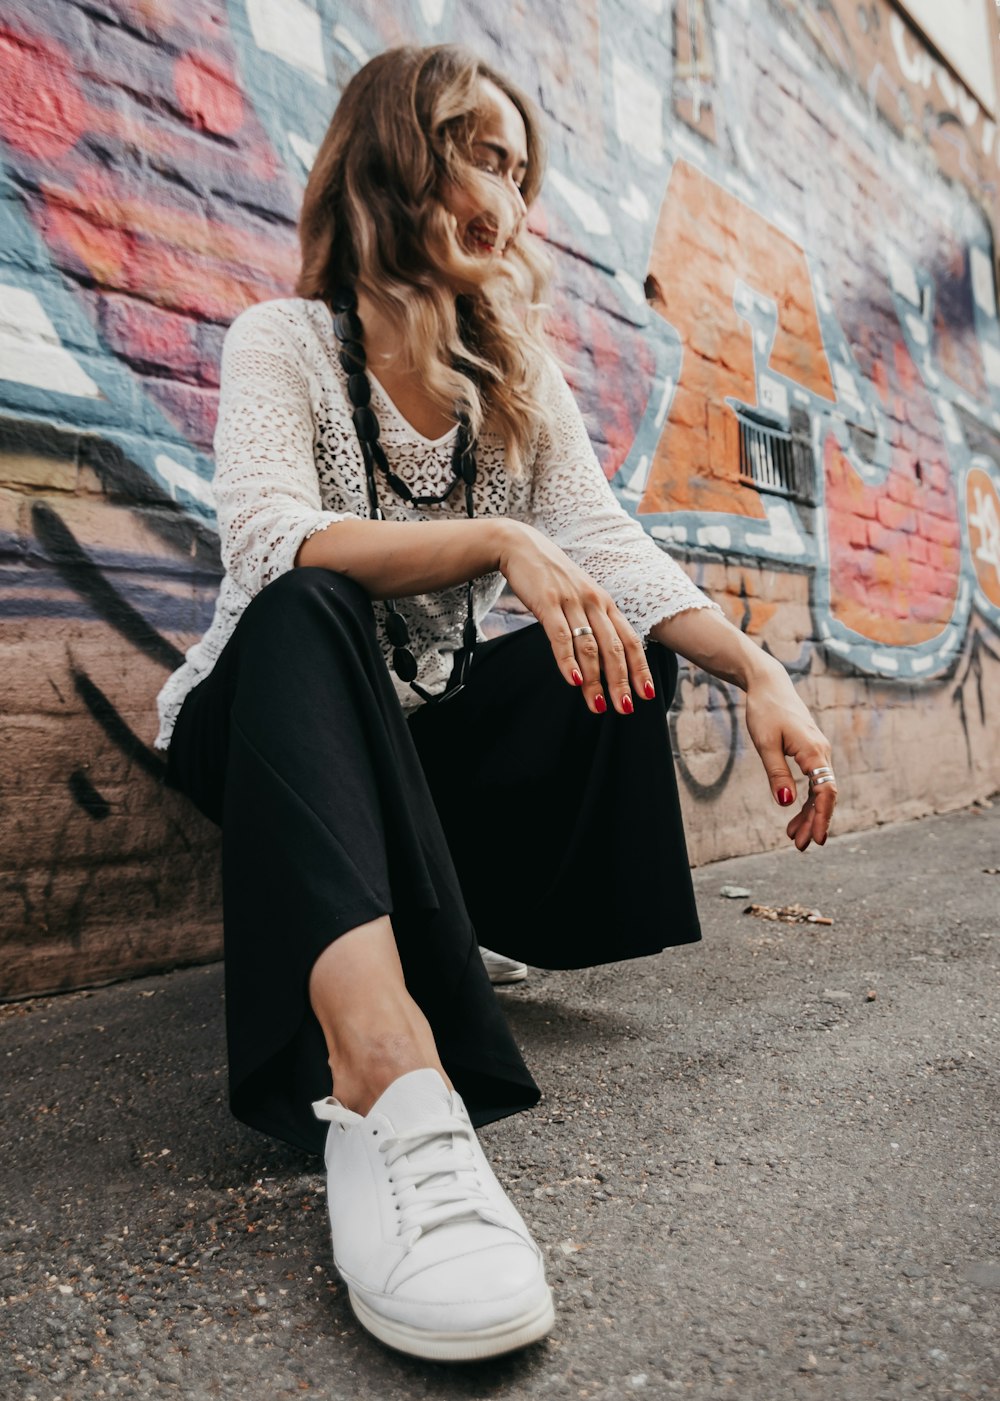 woman sitting in front of graffiti brick wall